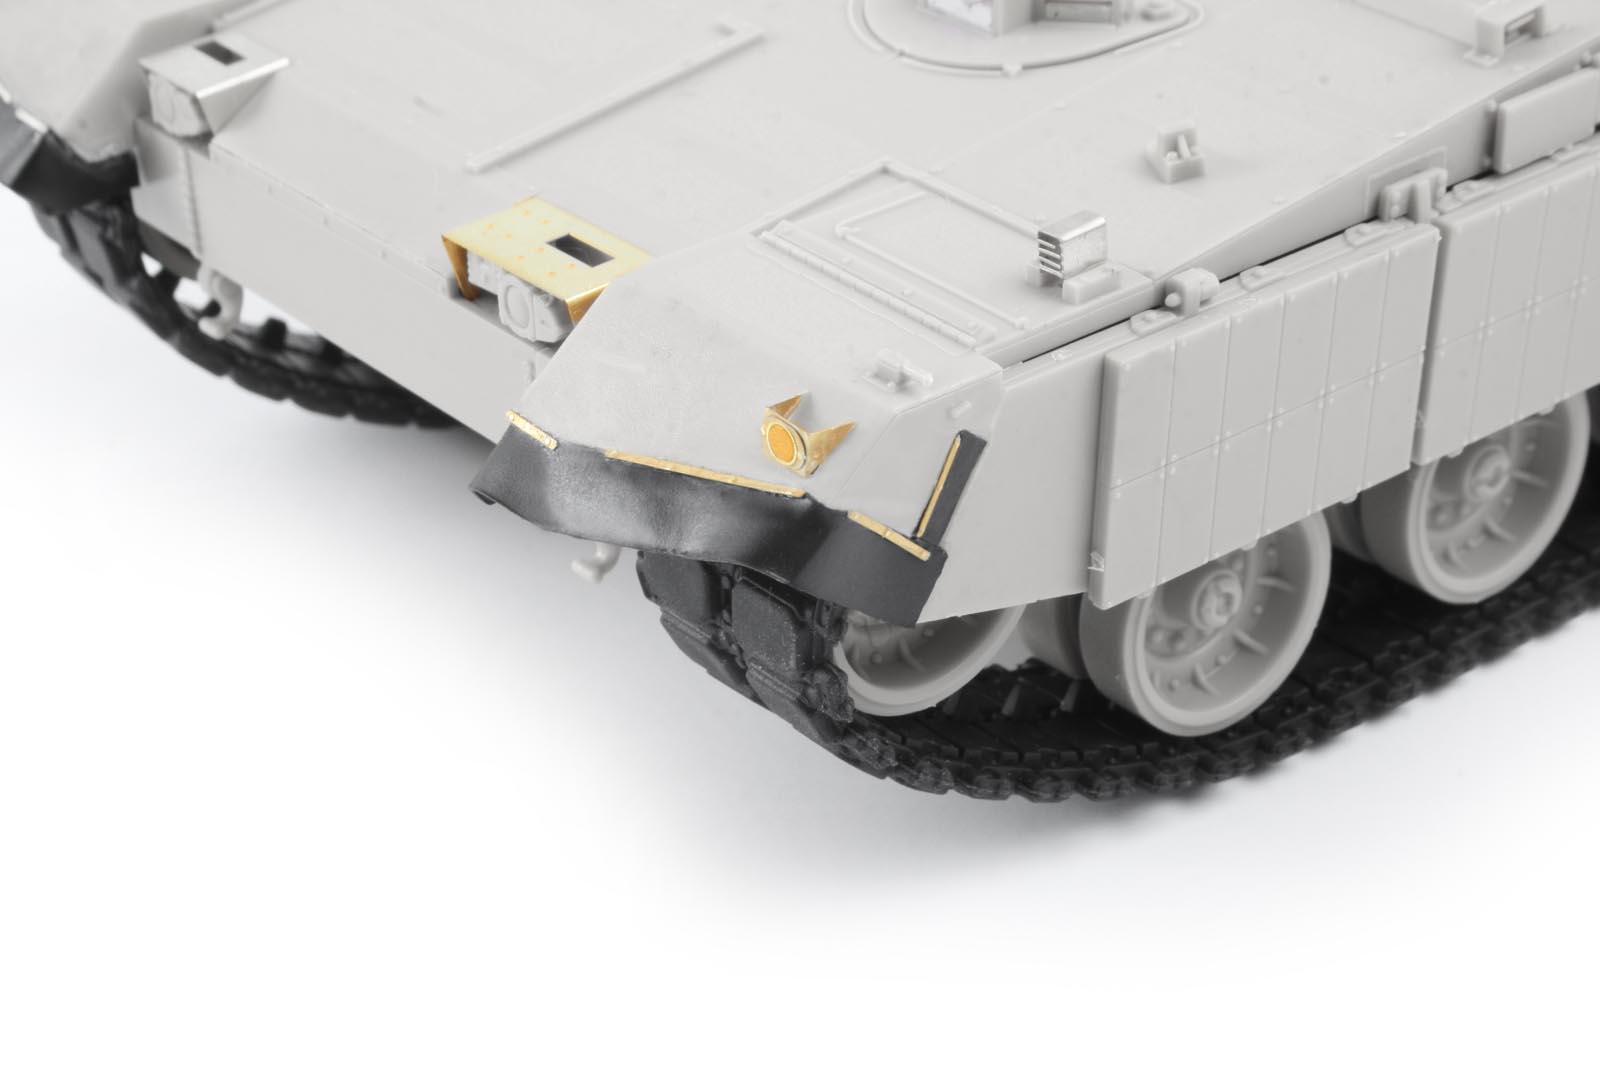 1/35 ROKA K2 MBT DX Pack Detail Up Set for Academy - Click Image to Close